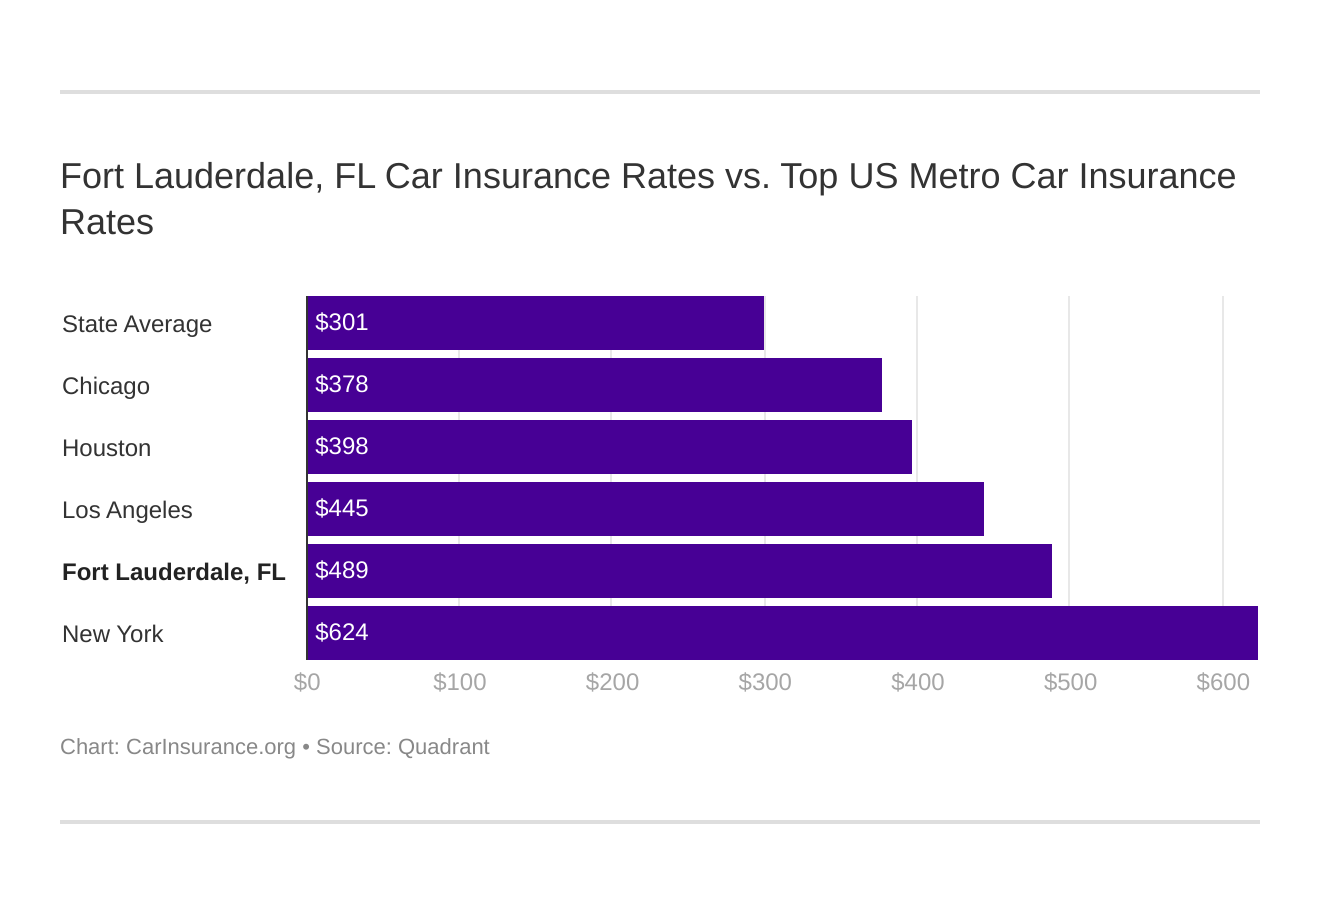 Fort Lauderdale, FL Car Insurance Rates vs. Top US Metro Car Insurance Rates